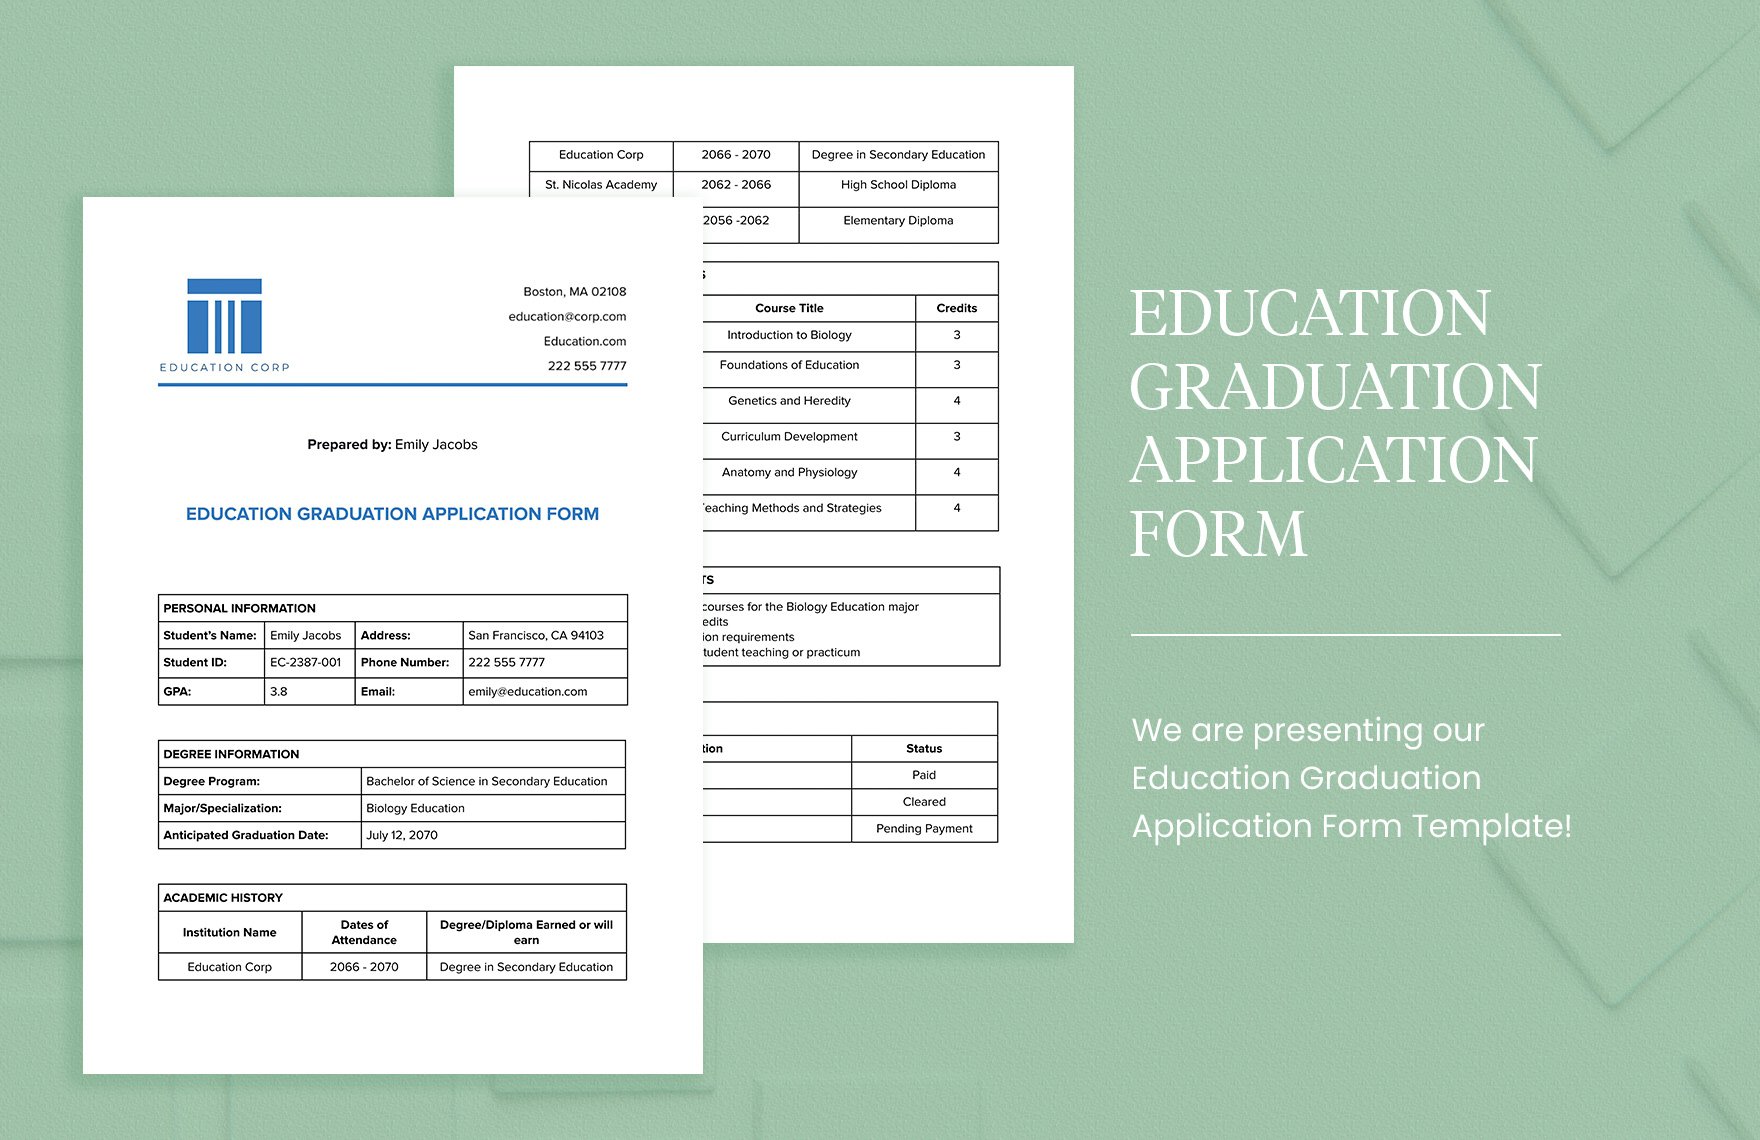  Education Graduation Application Form 